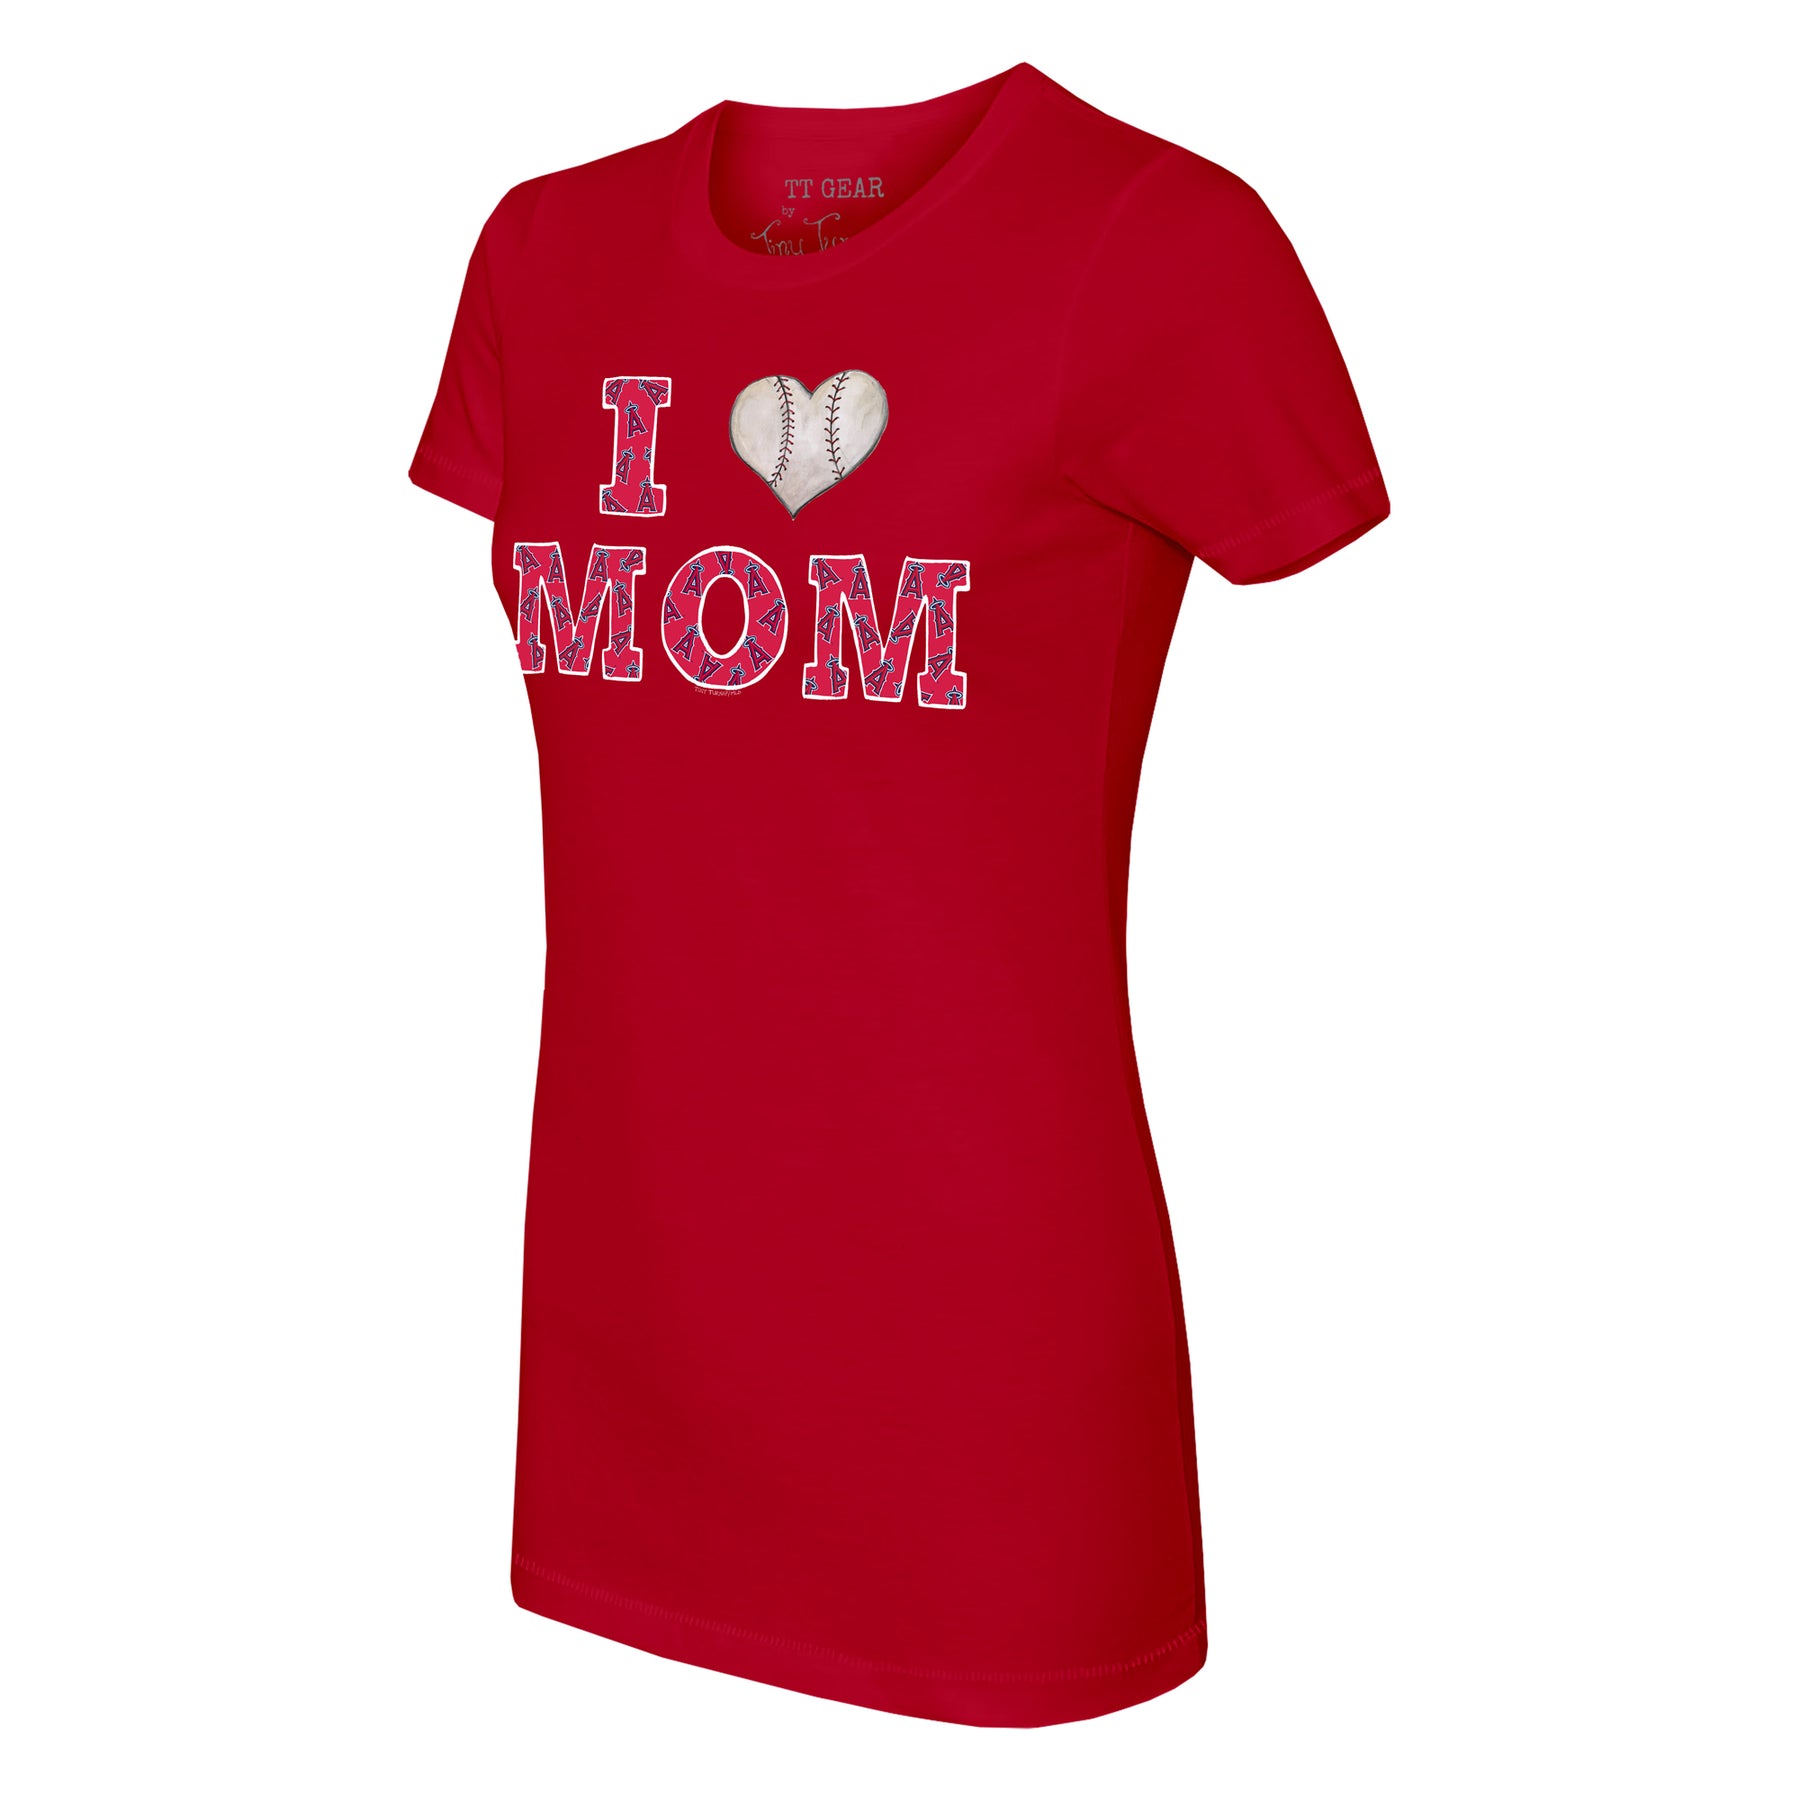 Los Angeles Angels I Love Mom Tee Shirt